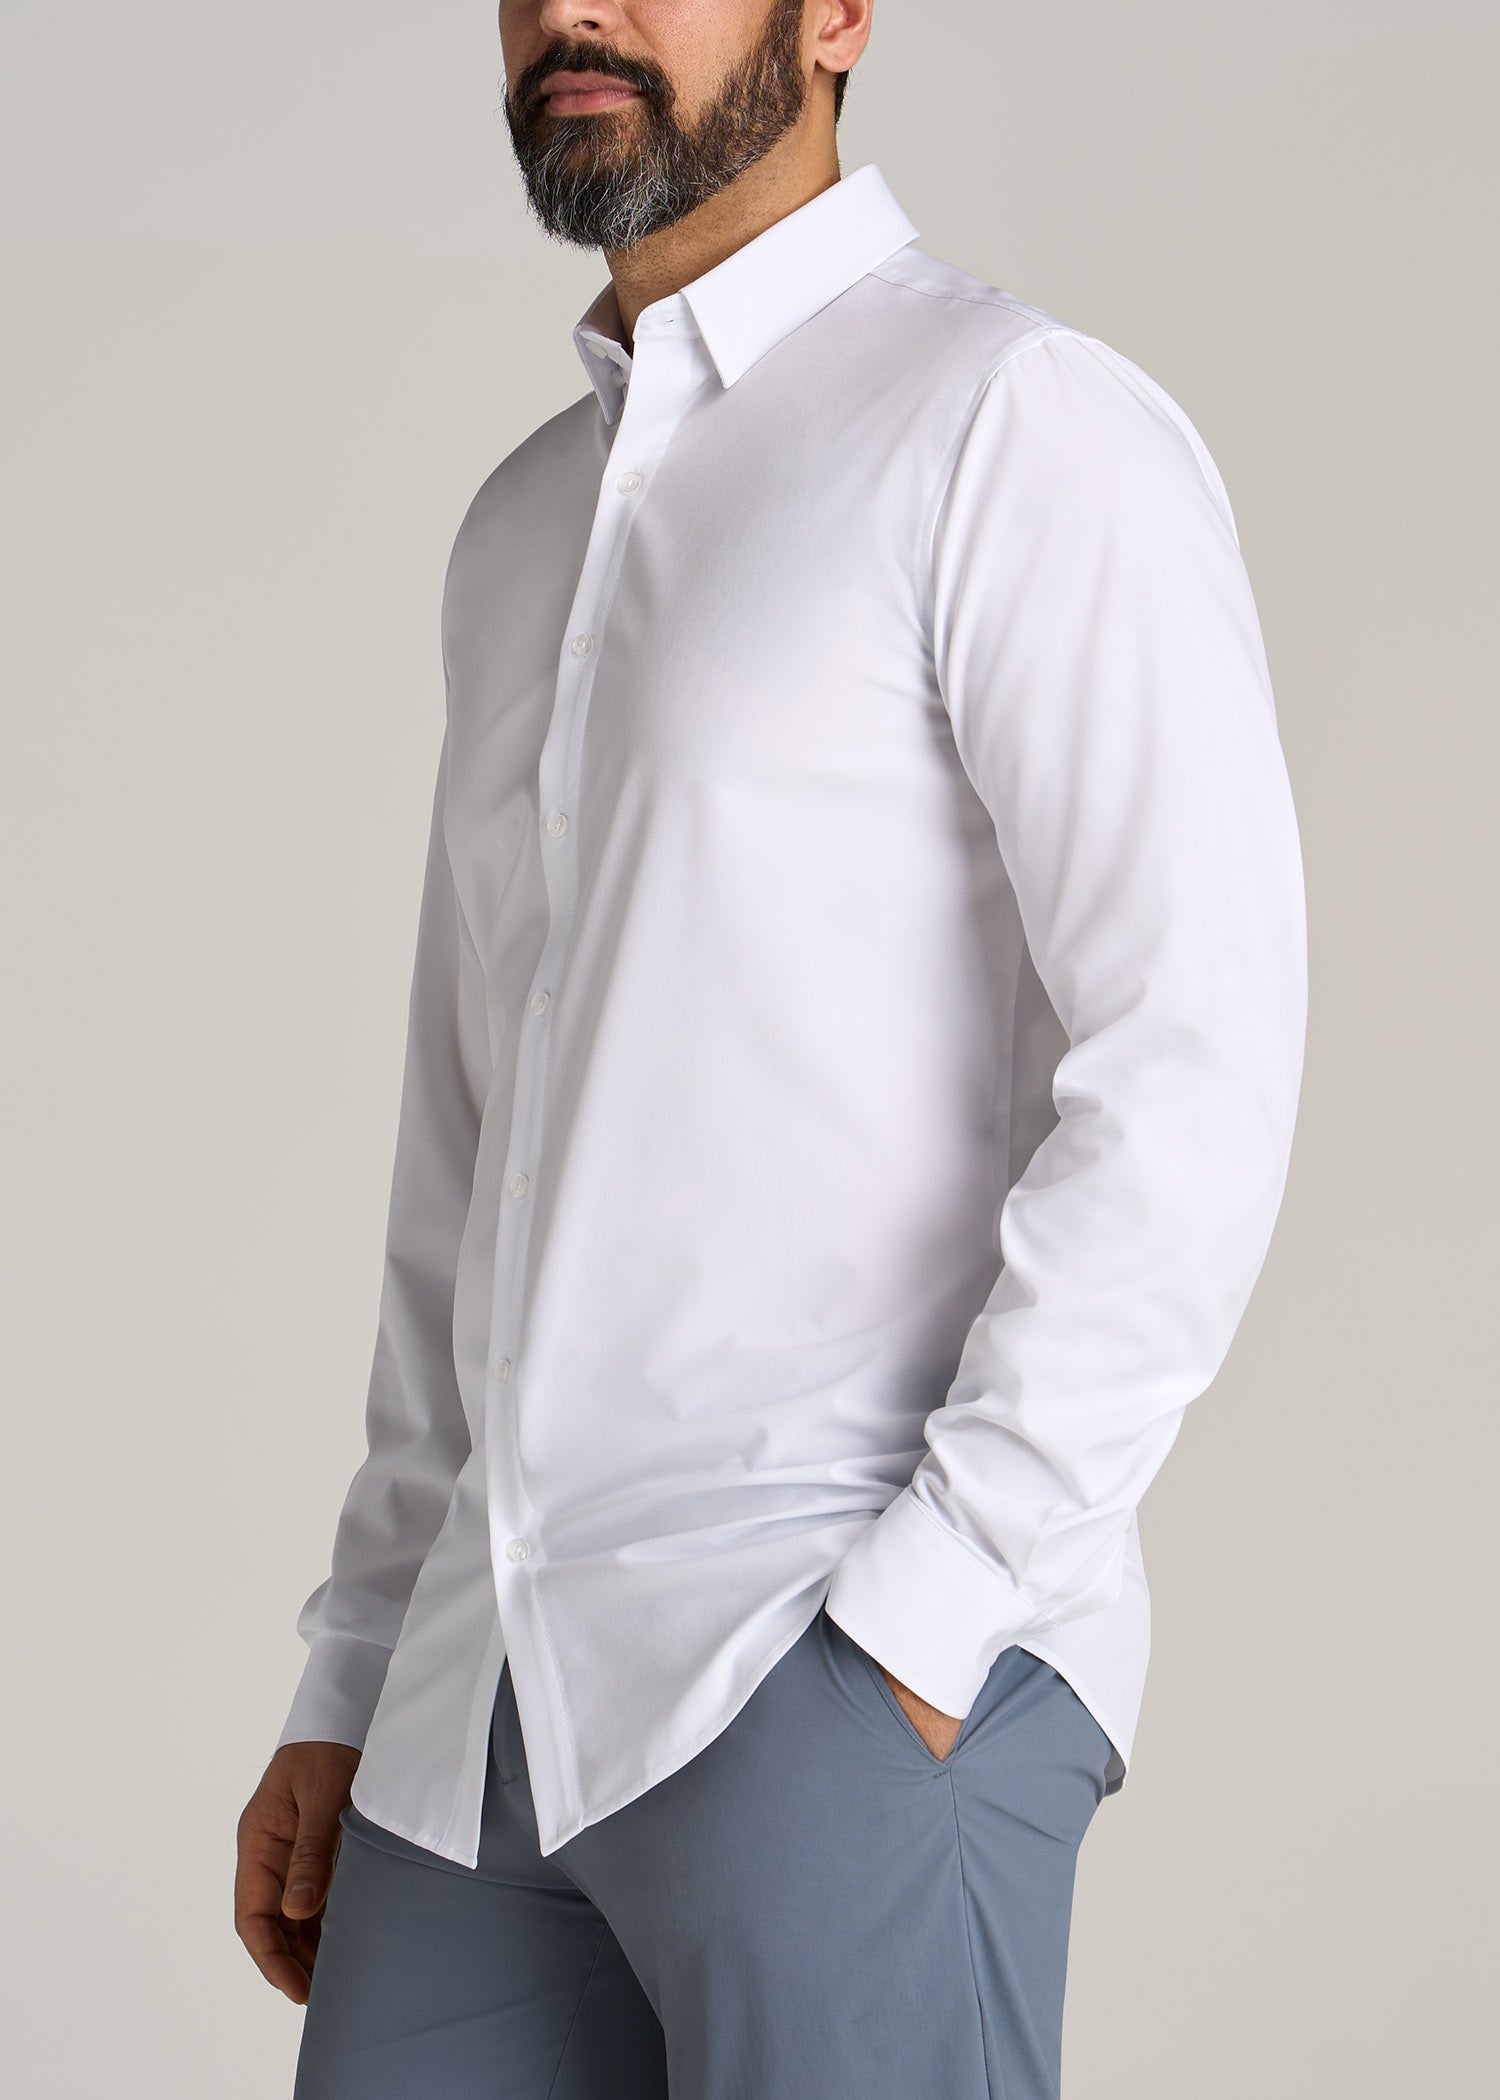 Men's Tall Traveler Stretch Dress Shirt White